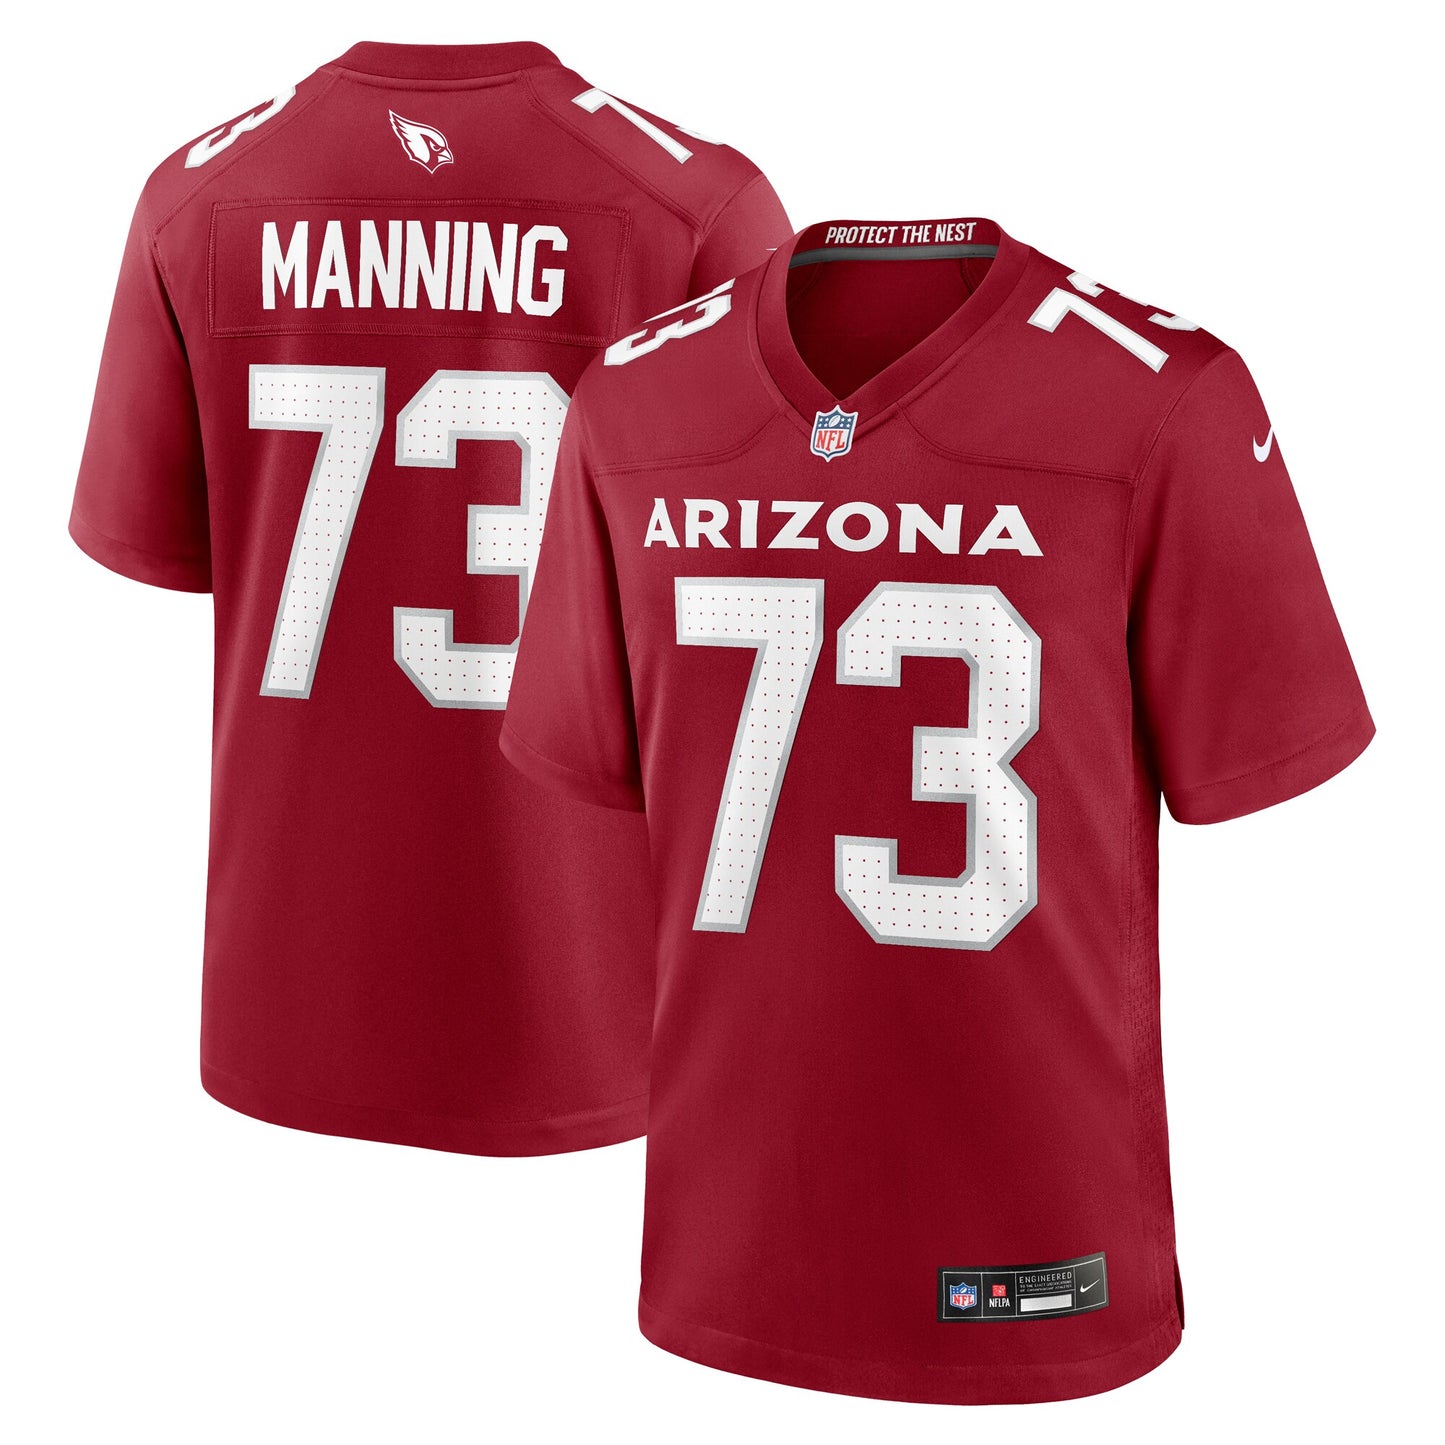 Ilm Manning Arizona Cardinals Nike Team Game Jersey - Cardinal